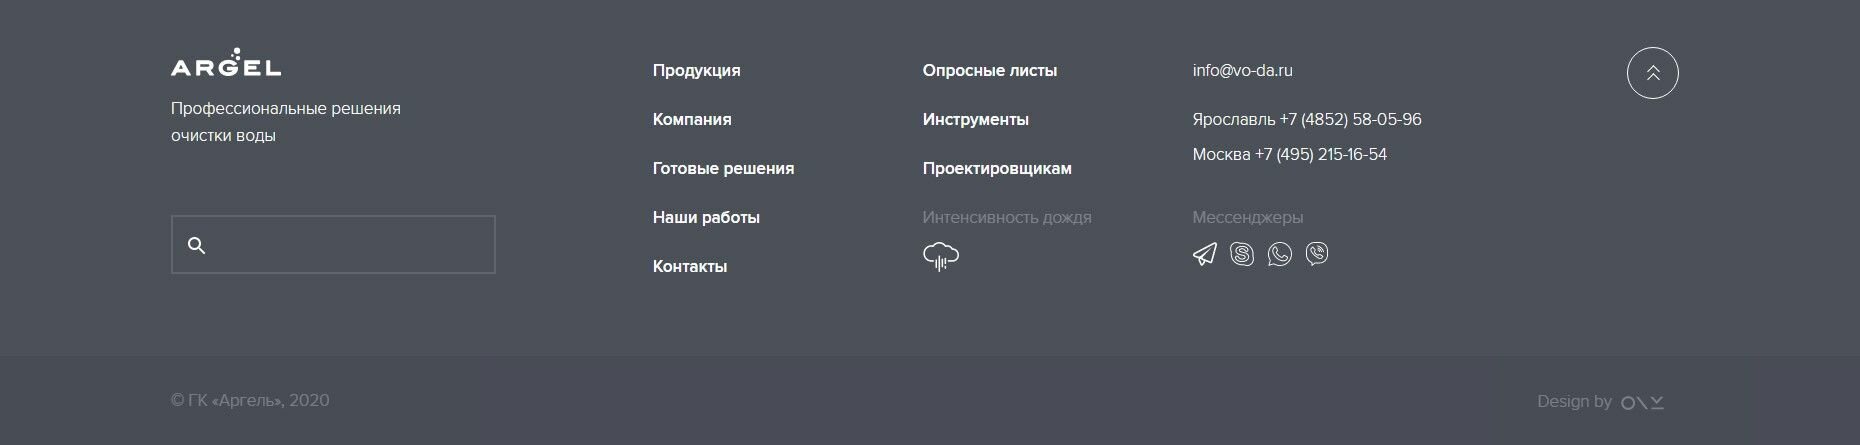 Строка поиска в подвале на примере www.vo-da.ru